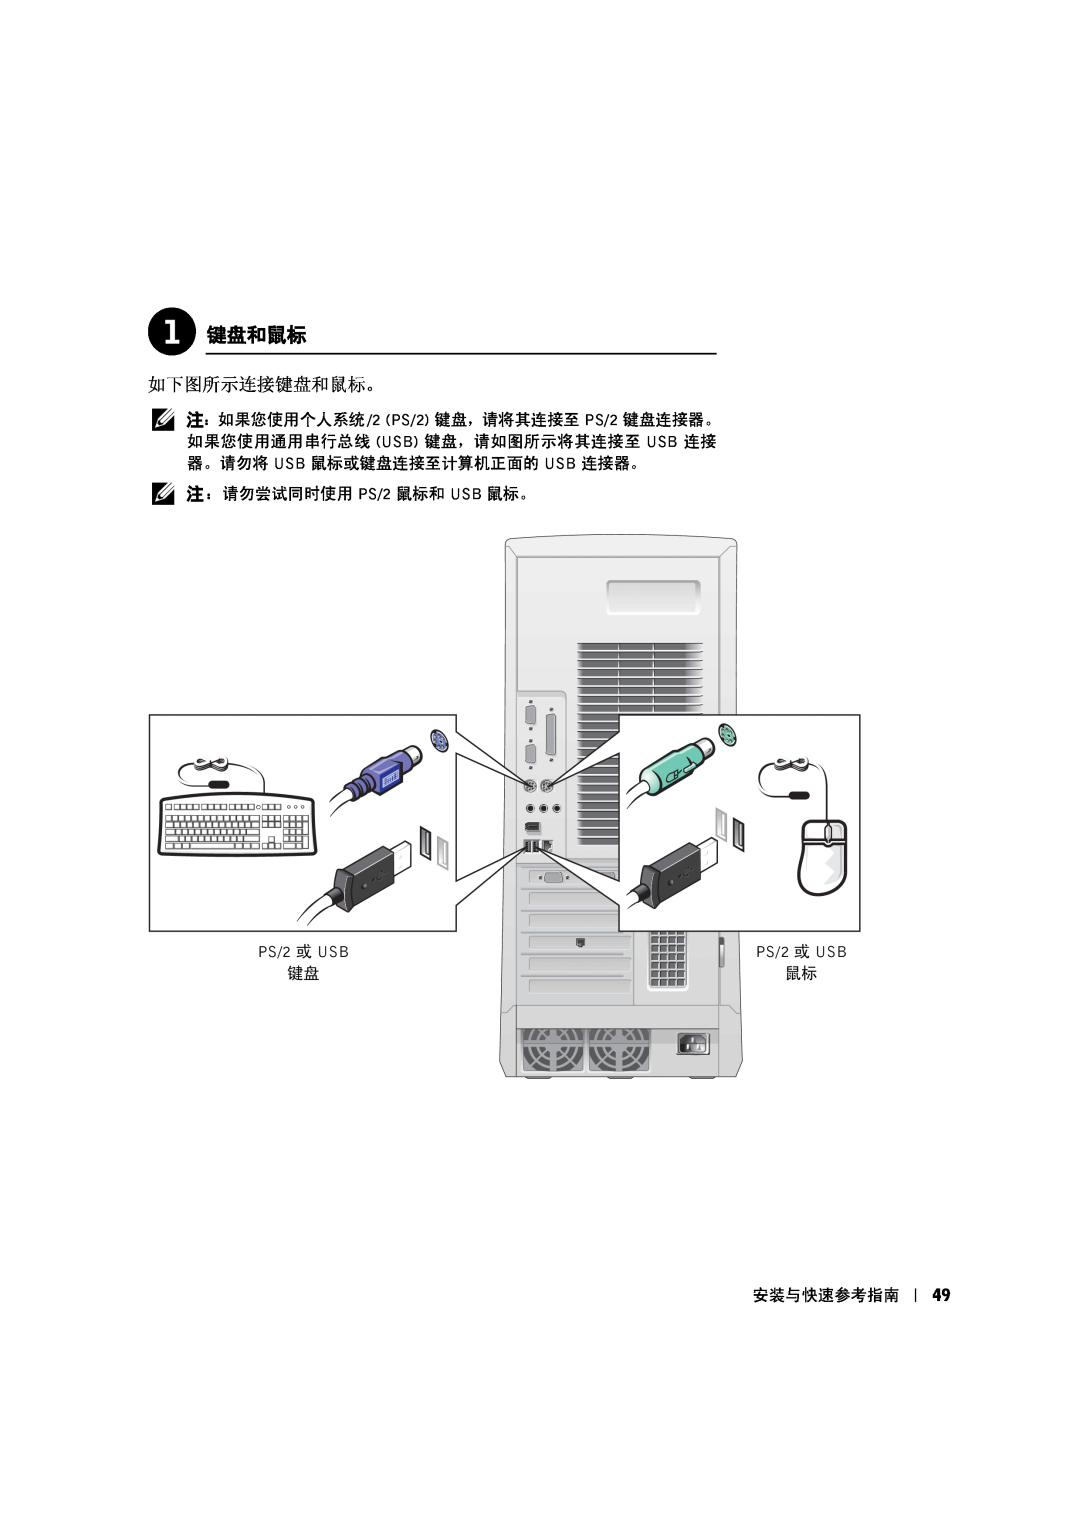 Dell 533CX manual 1 键盘和鼠标, 如下图所示连接键盘和鼠标。 